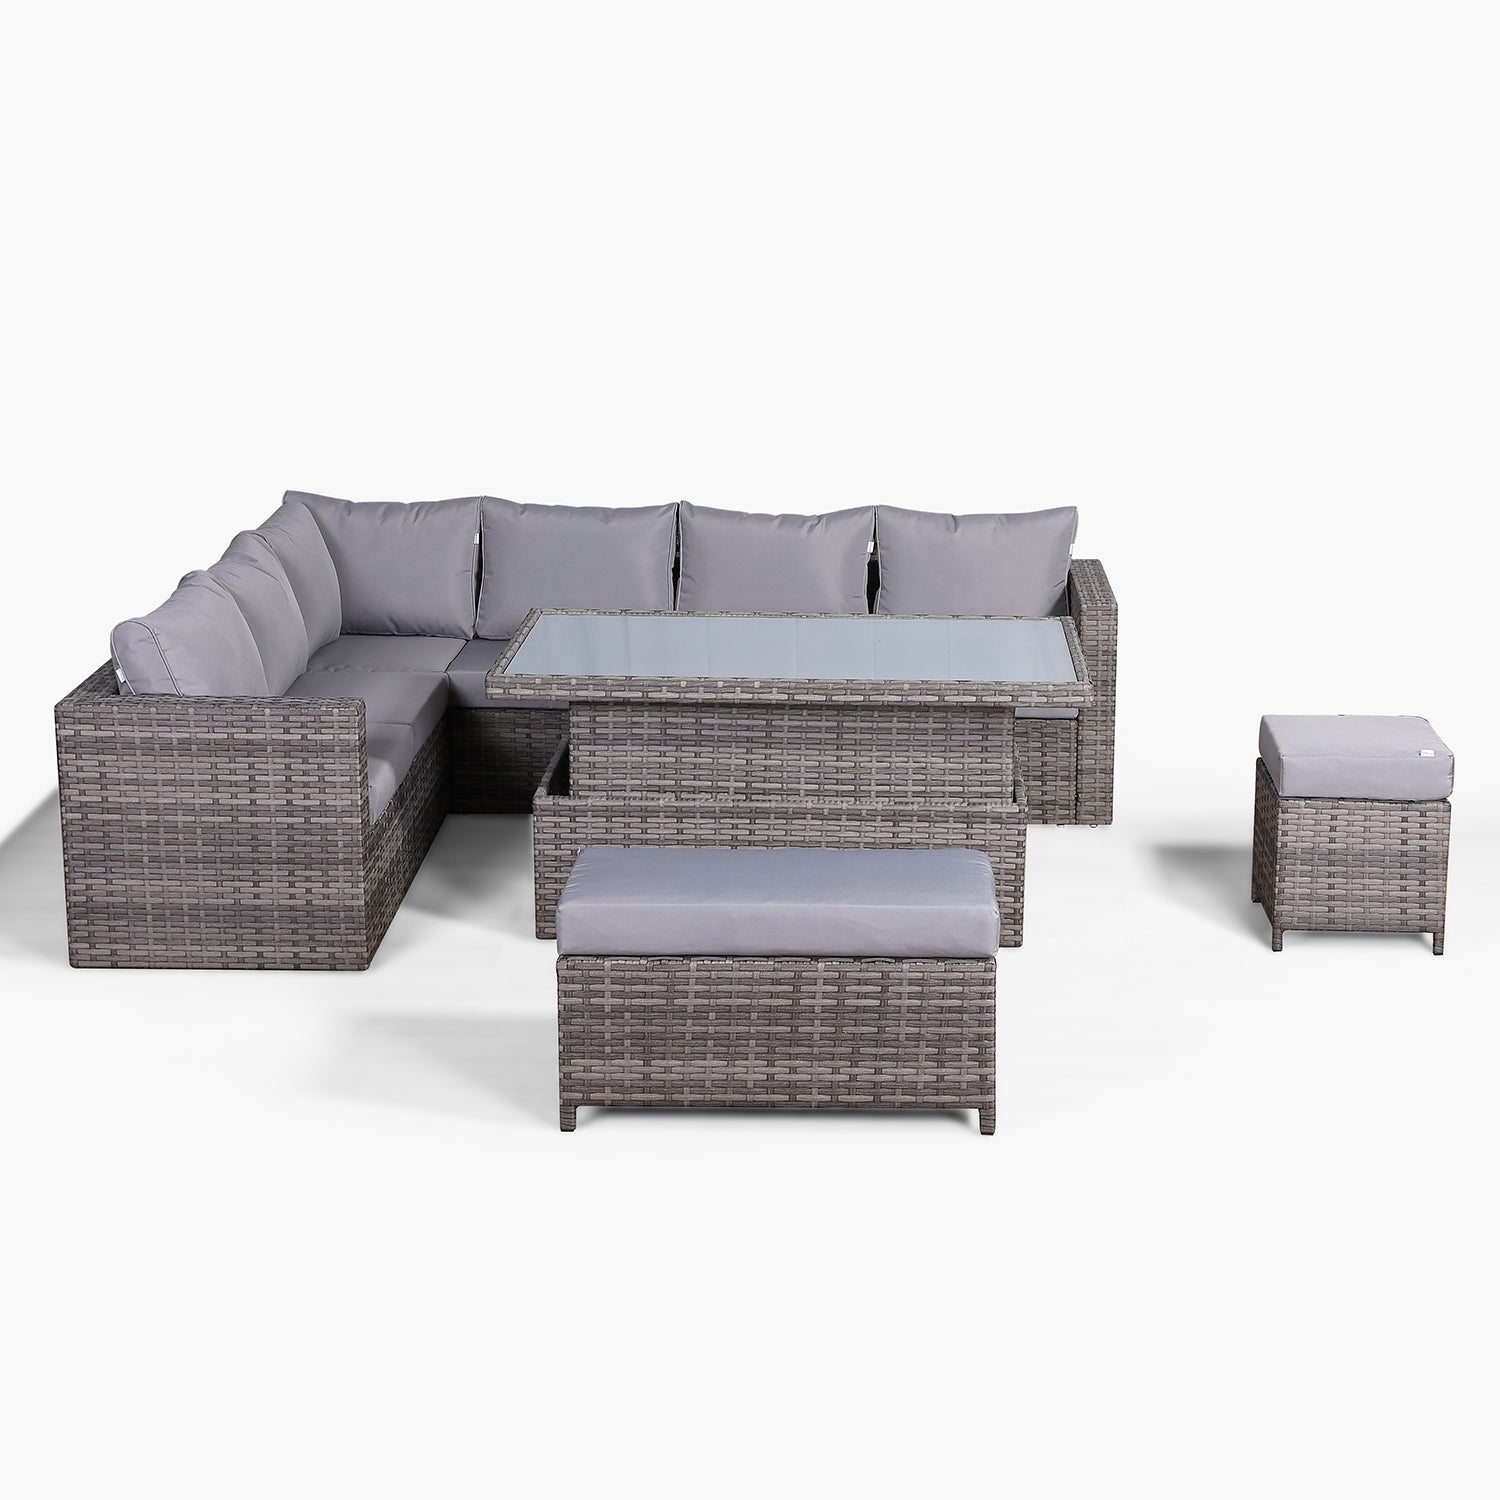 Colette Range Left Hand Corner Sofa with Rising Table in Medium Grey Weave